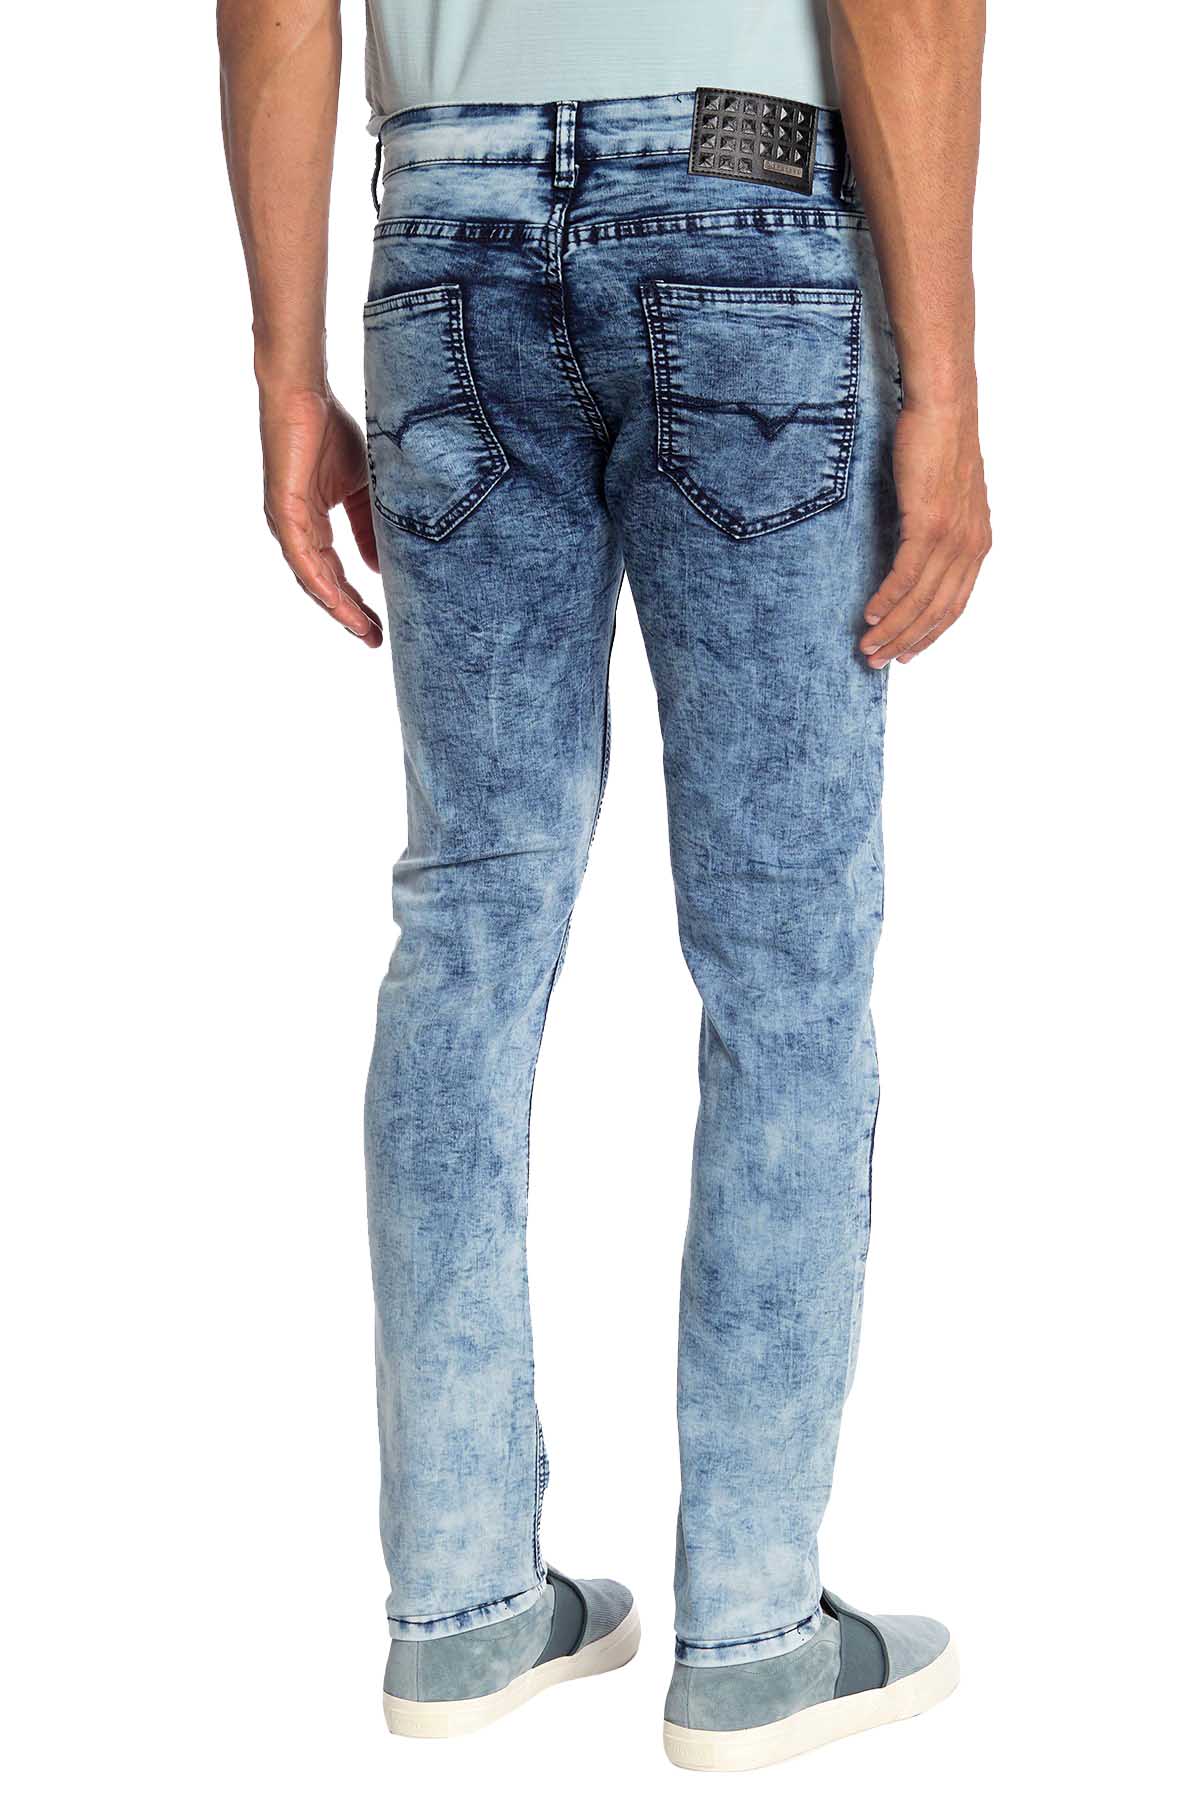 Recess Jeans Light Blue Solid Stretch Slim Jean | CheapUndies